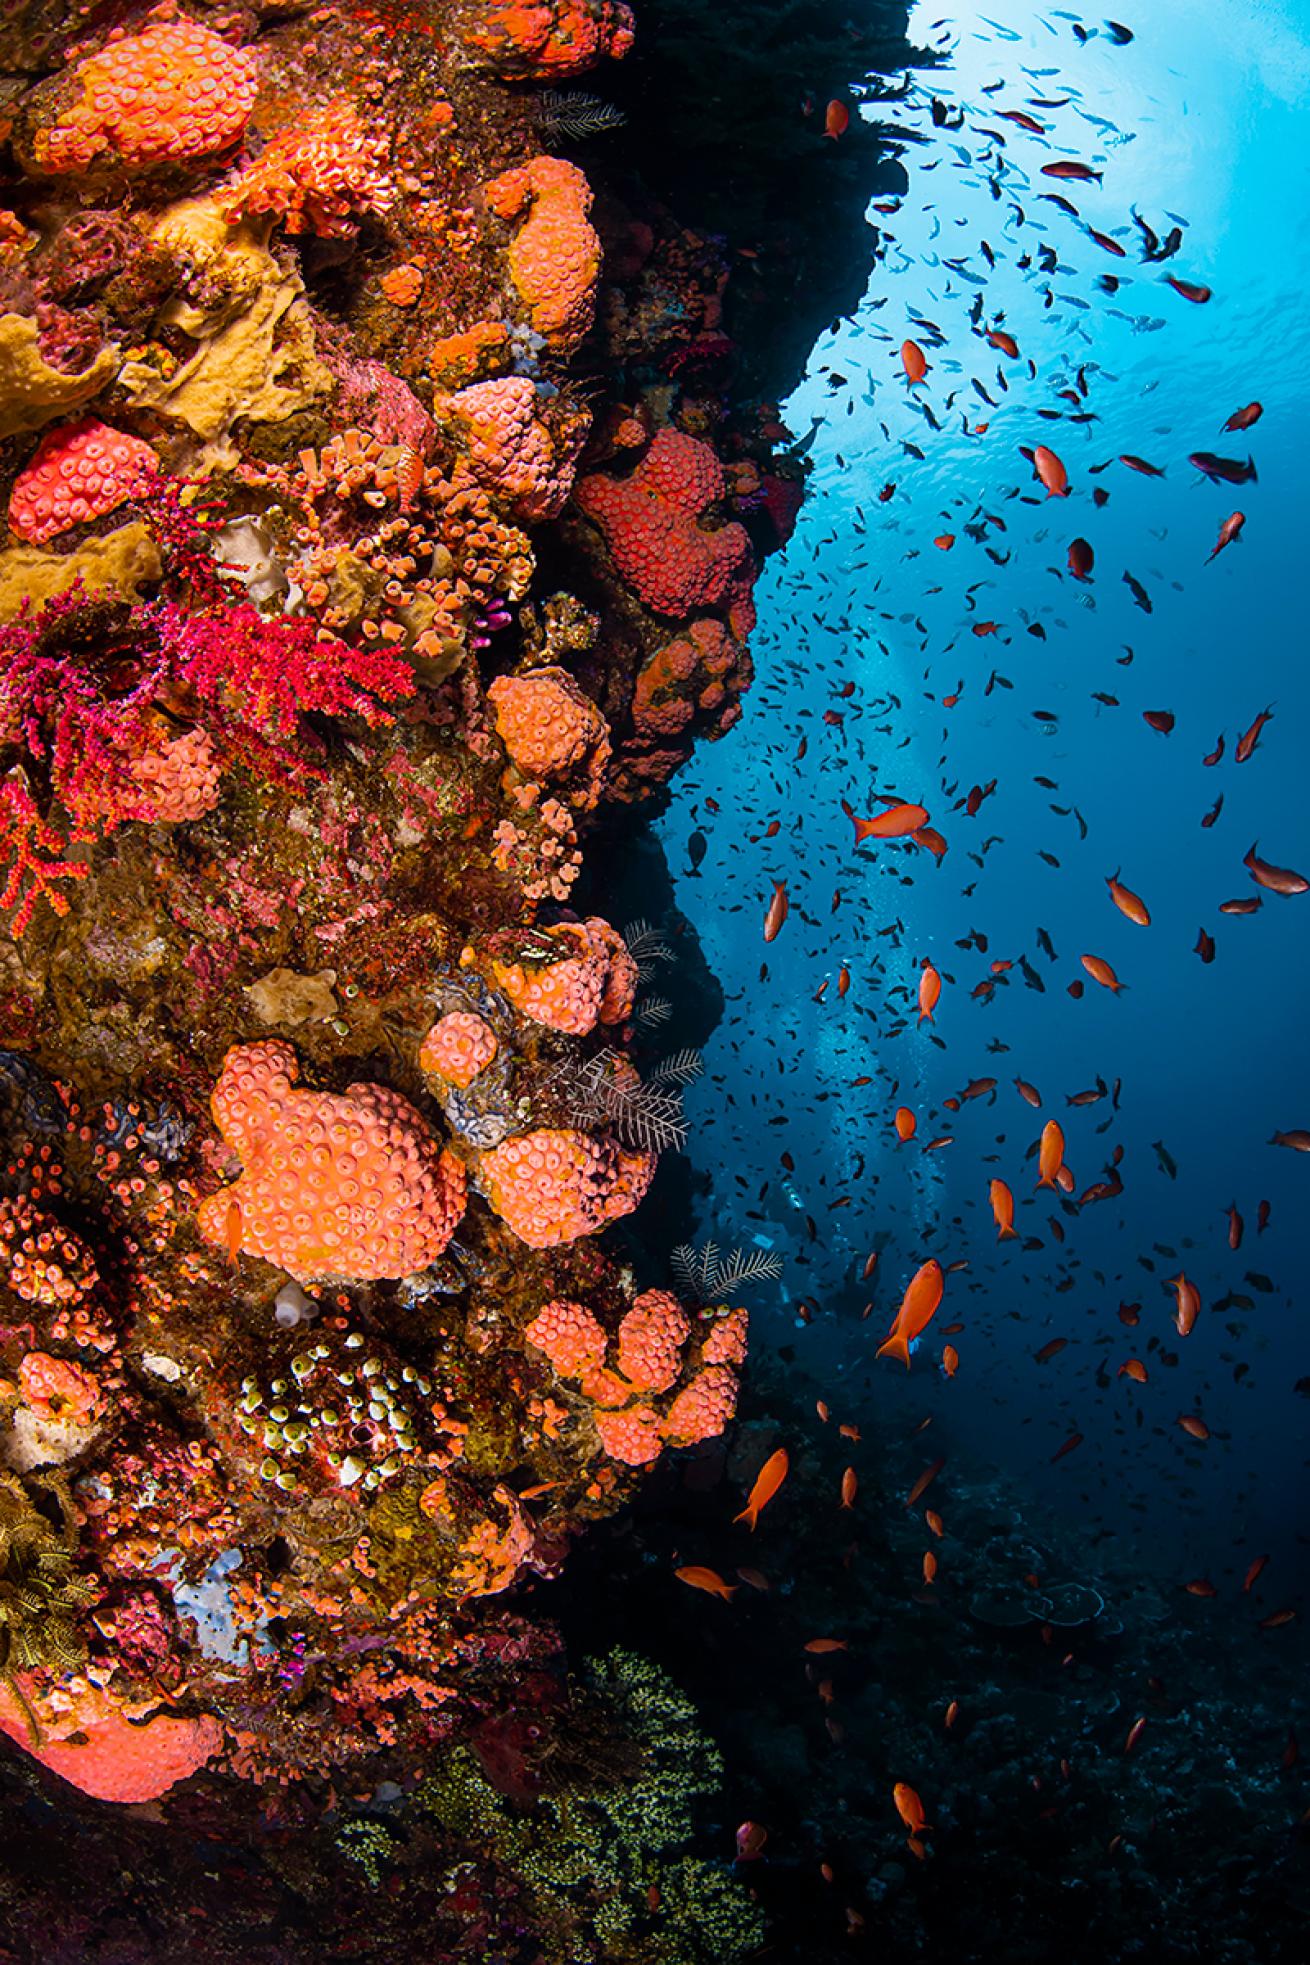 Fish swarm a vertical reef in Komodo, Indonesia.